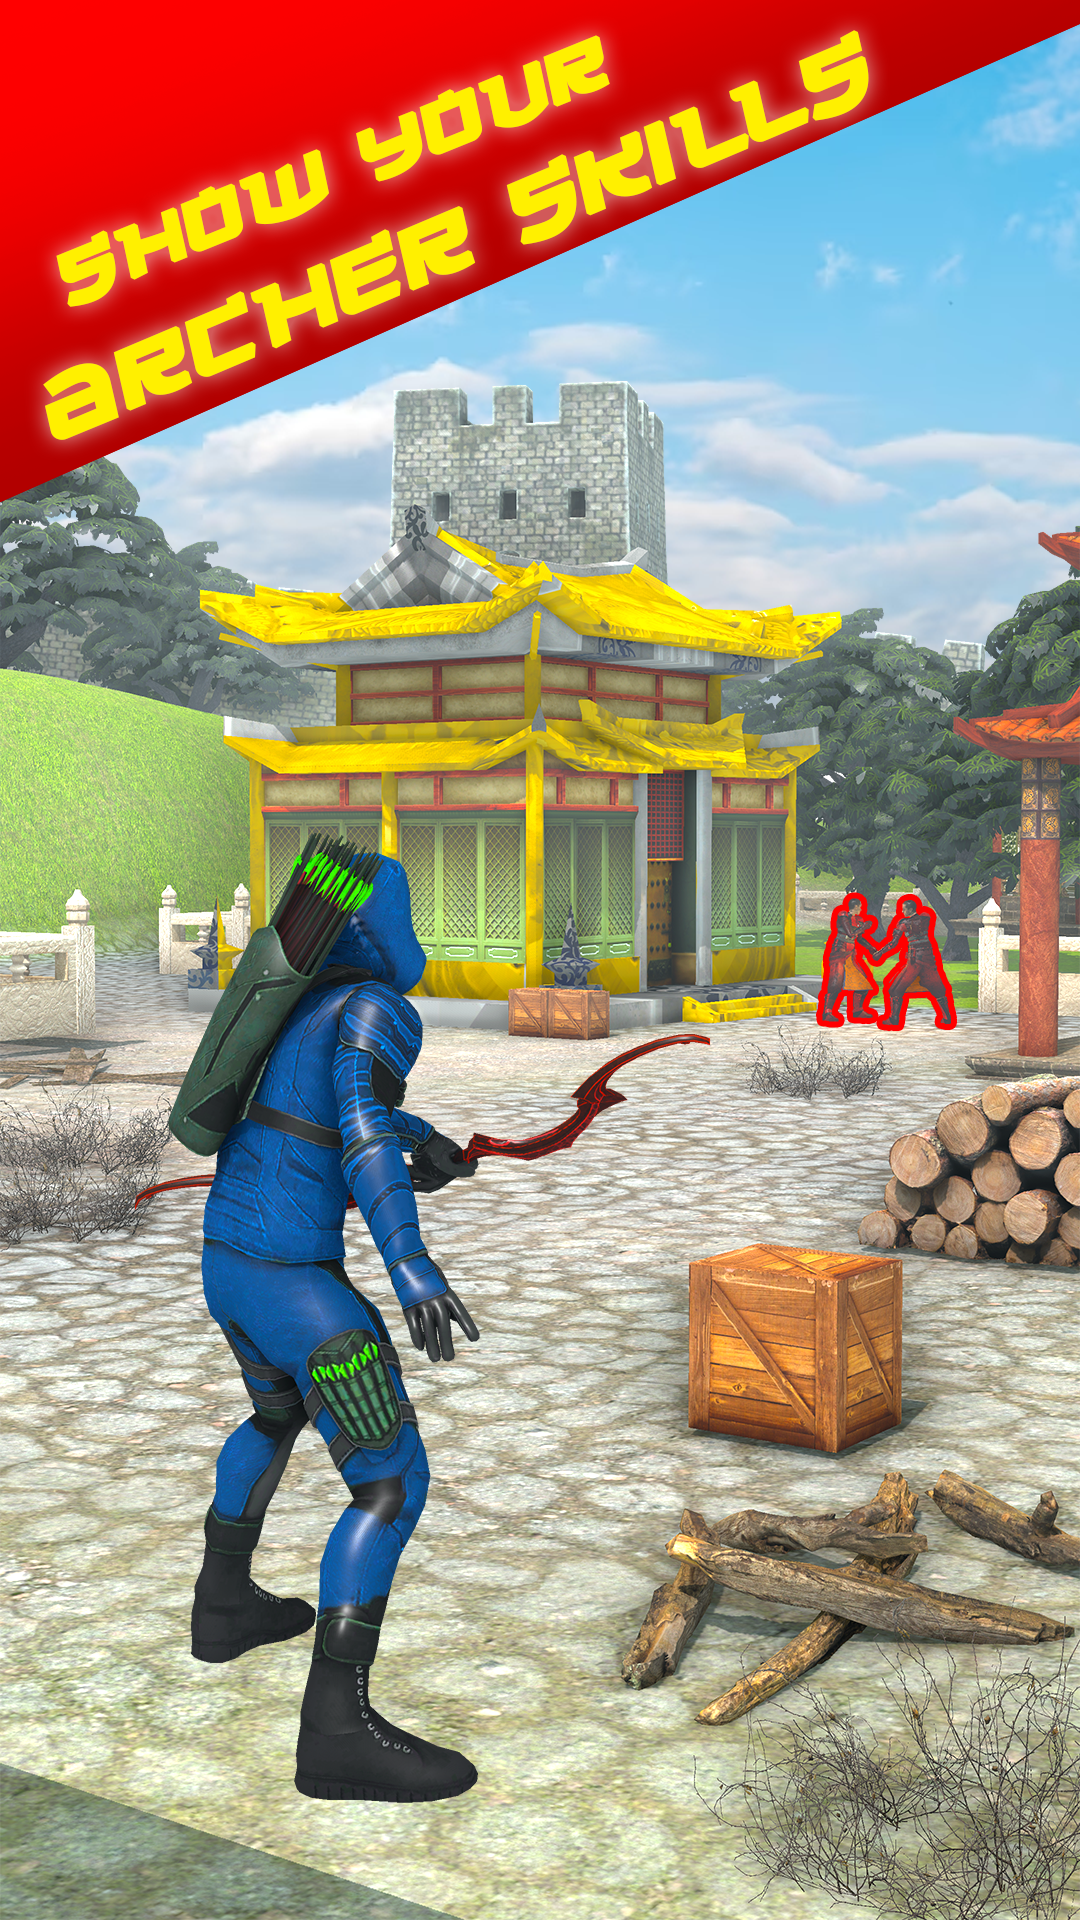 Screenshot of Archer Attack: 3D Shooter Game